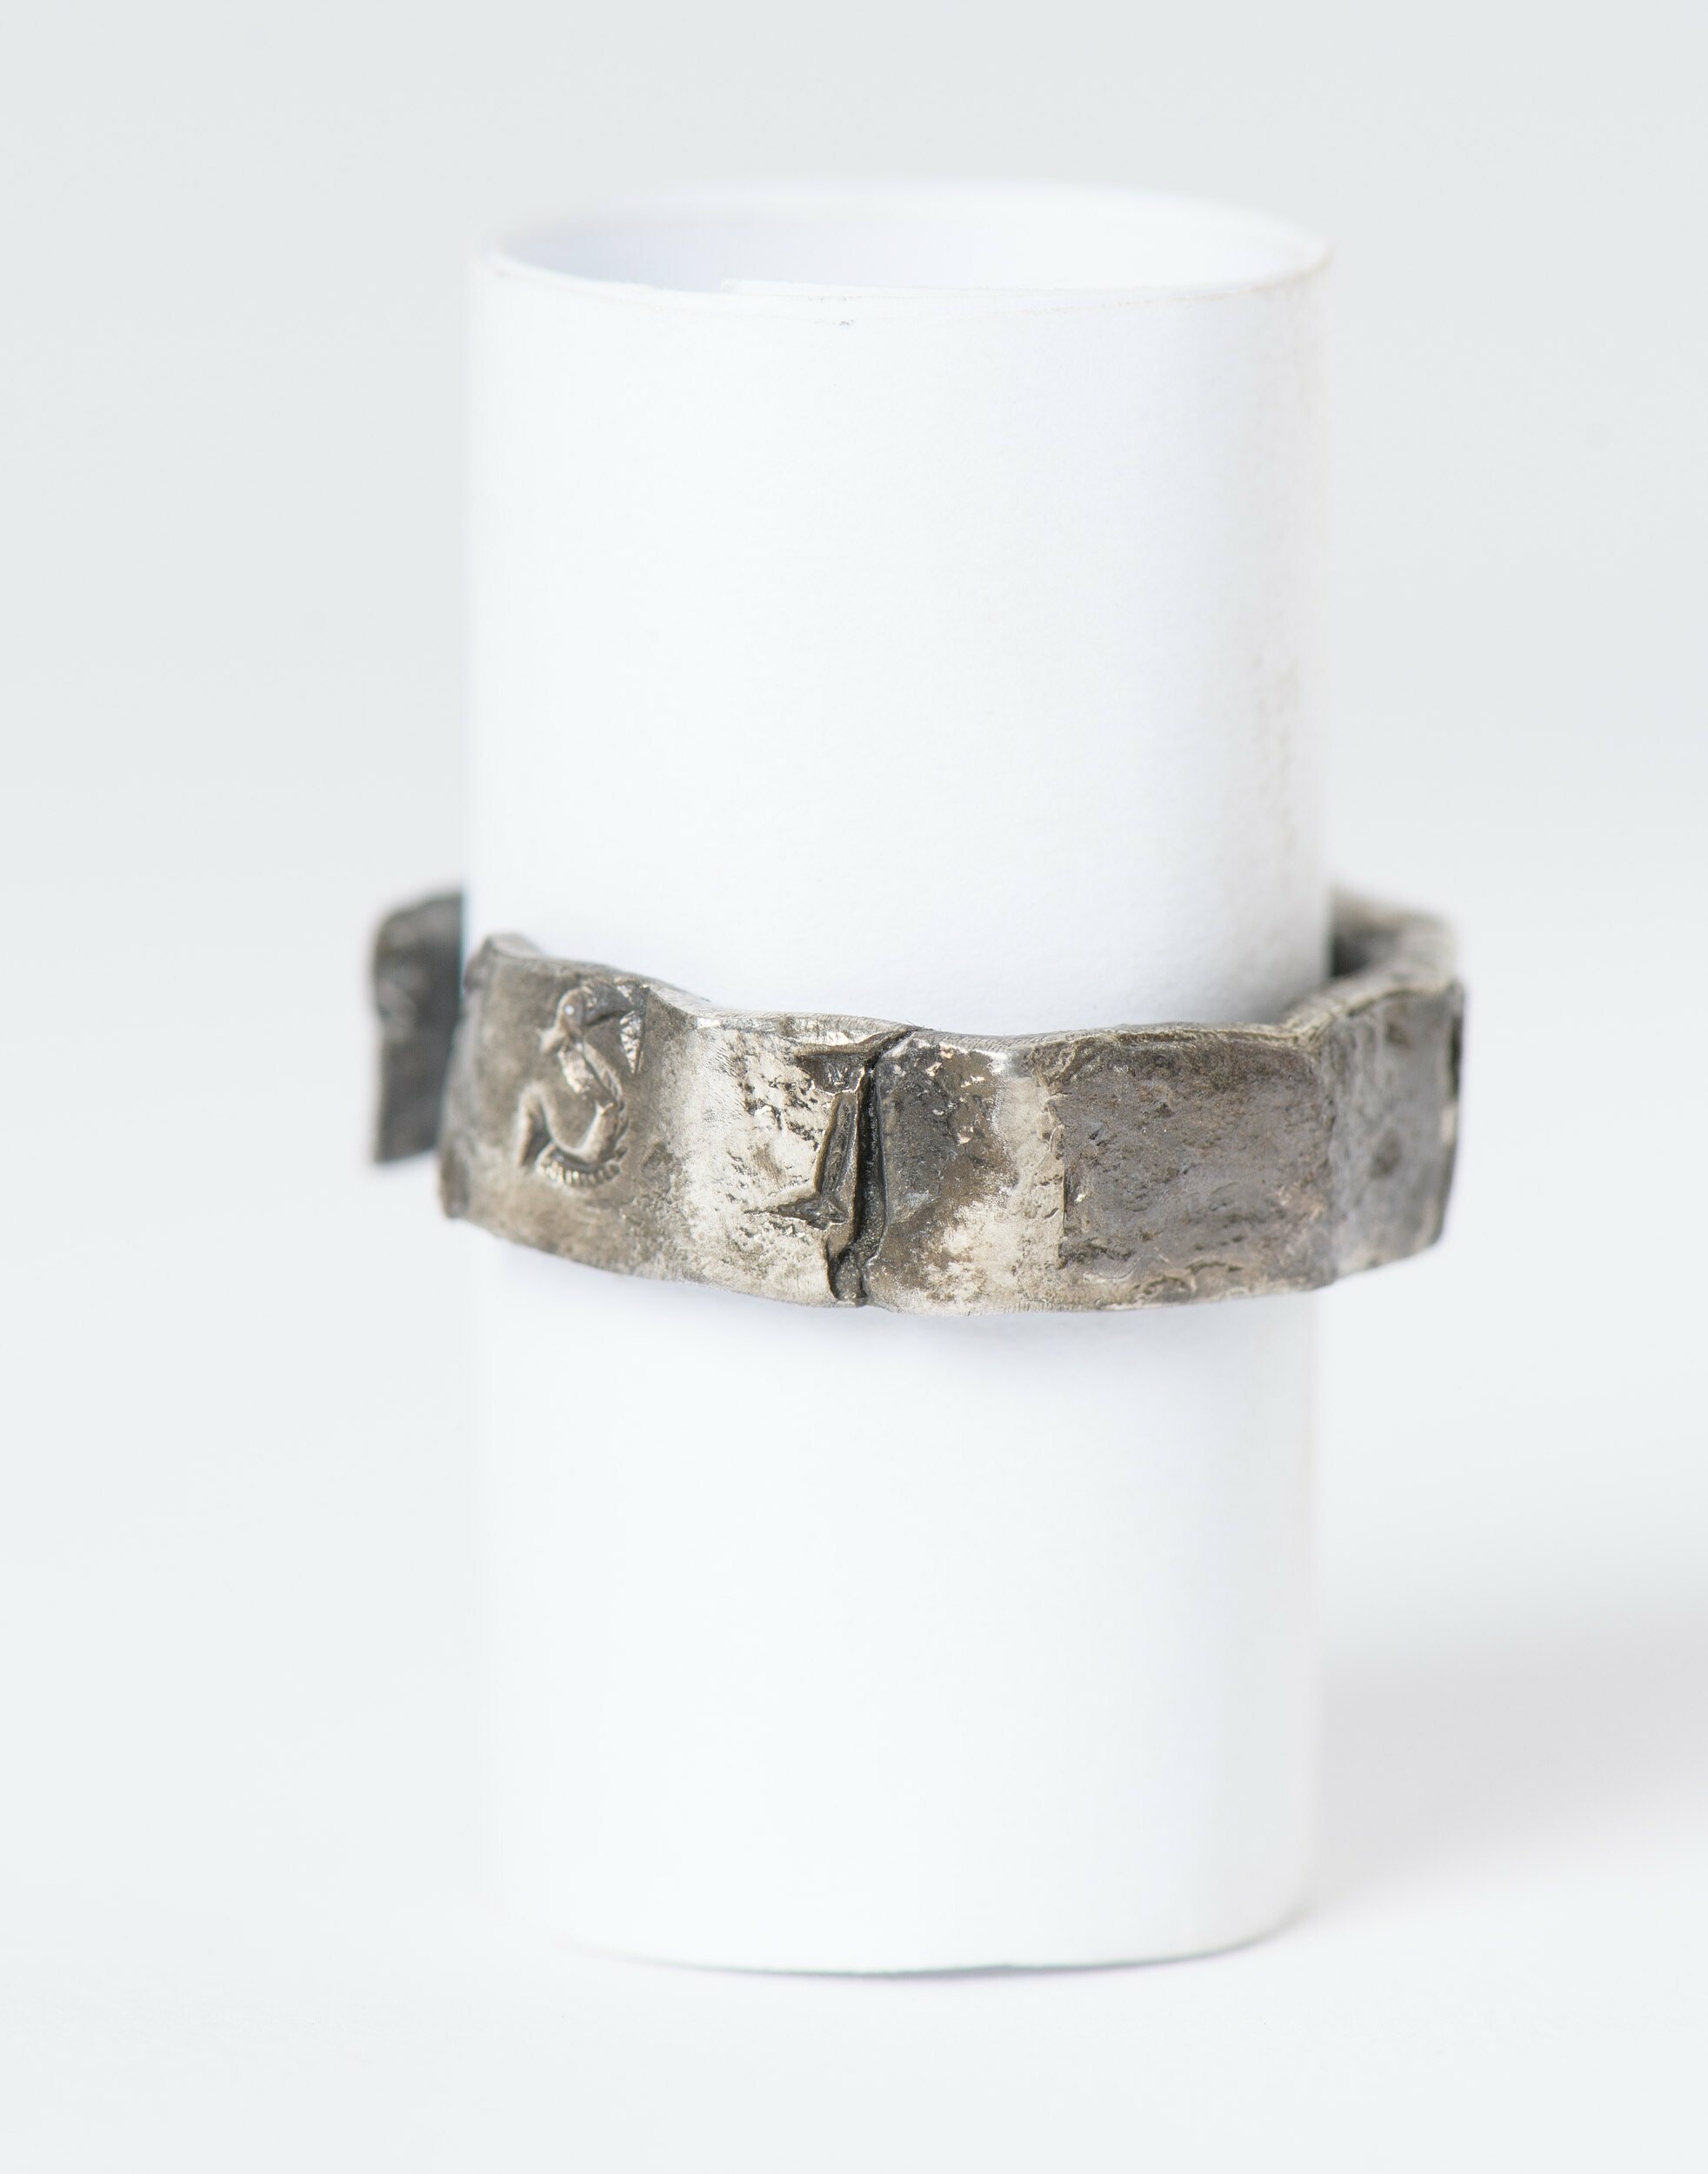 Gyűrű (Laczkó Dezső Múzeum CC BY-NC-SA)